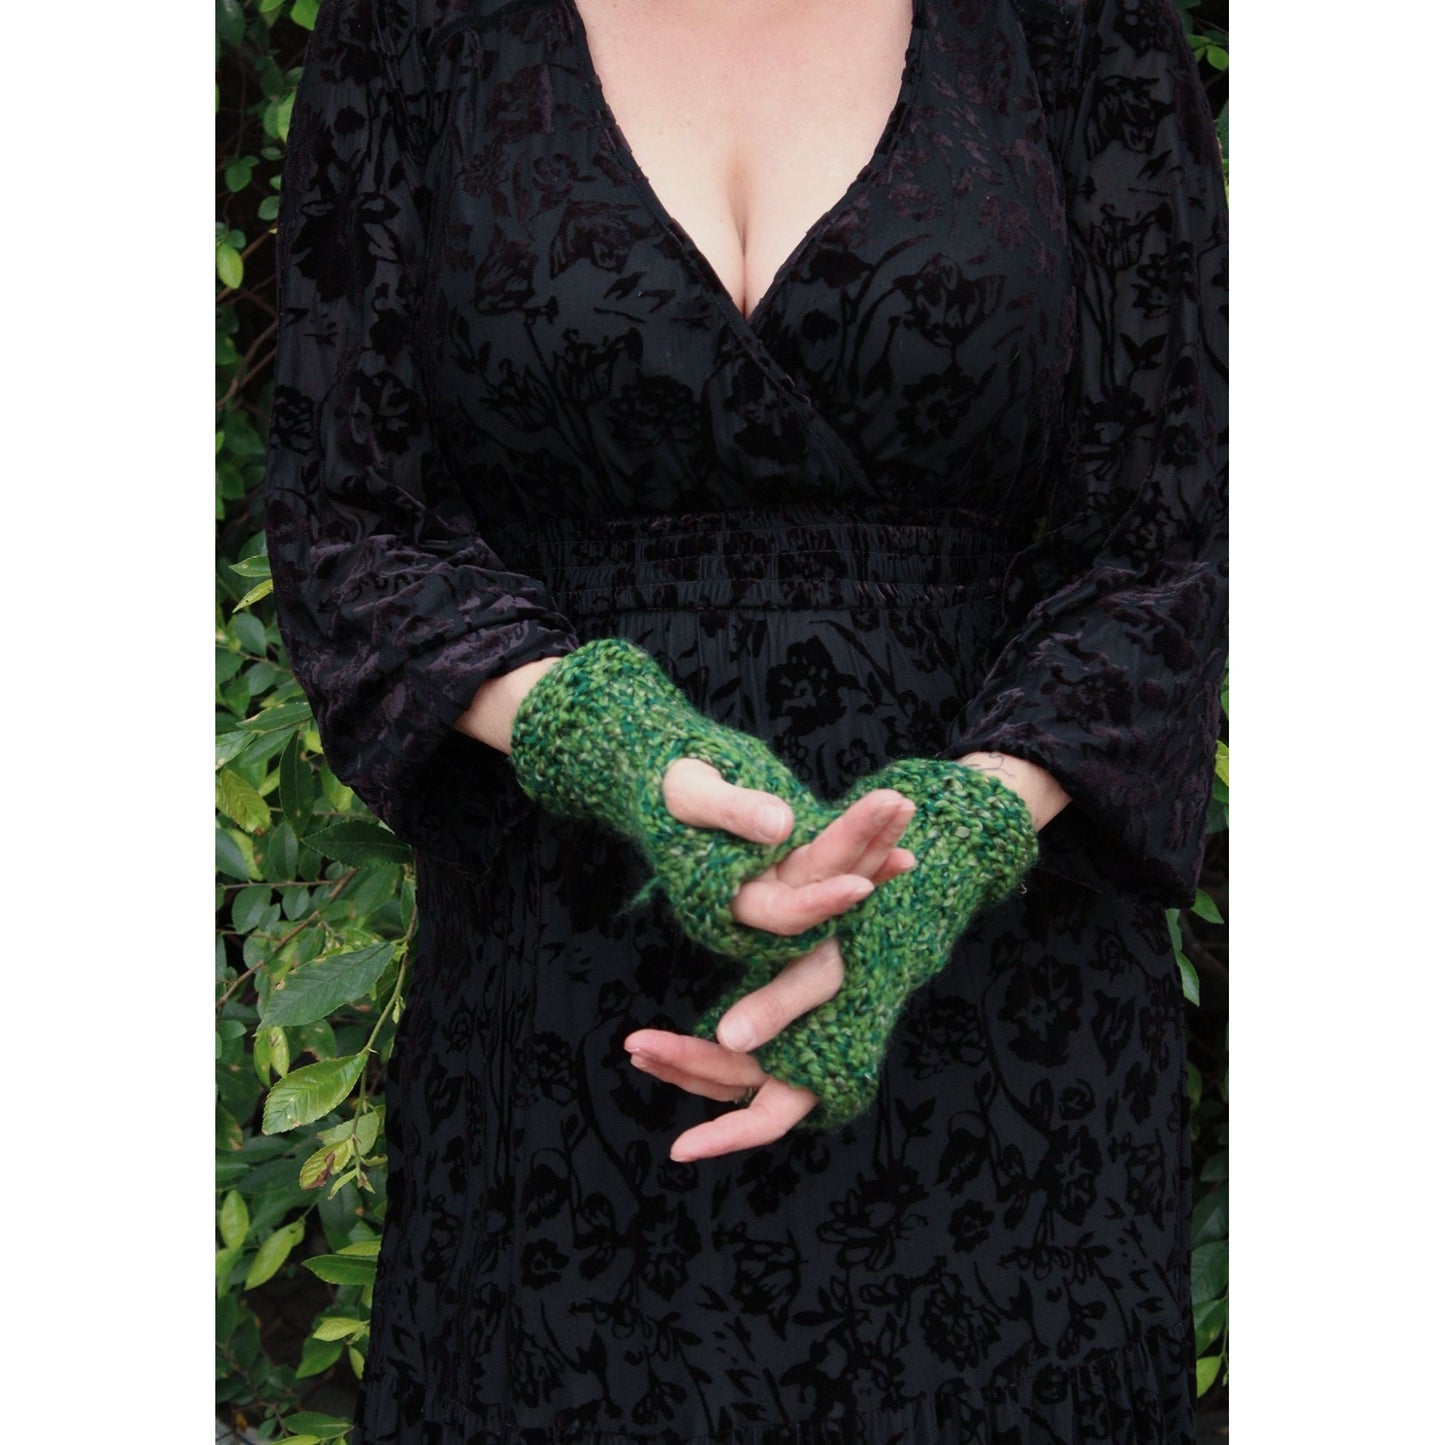 "Emerald Isle" Handknit Fingerless Gloves